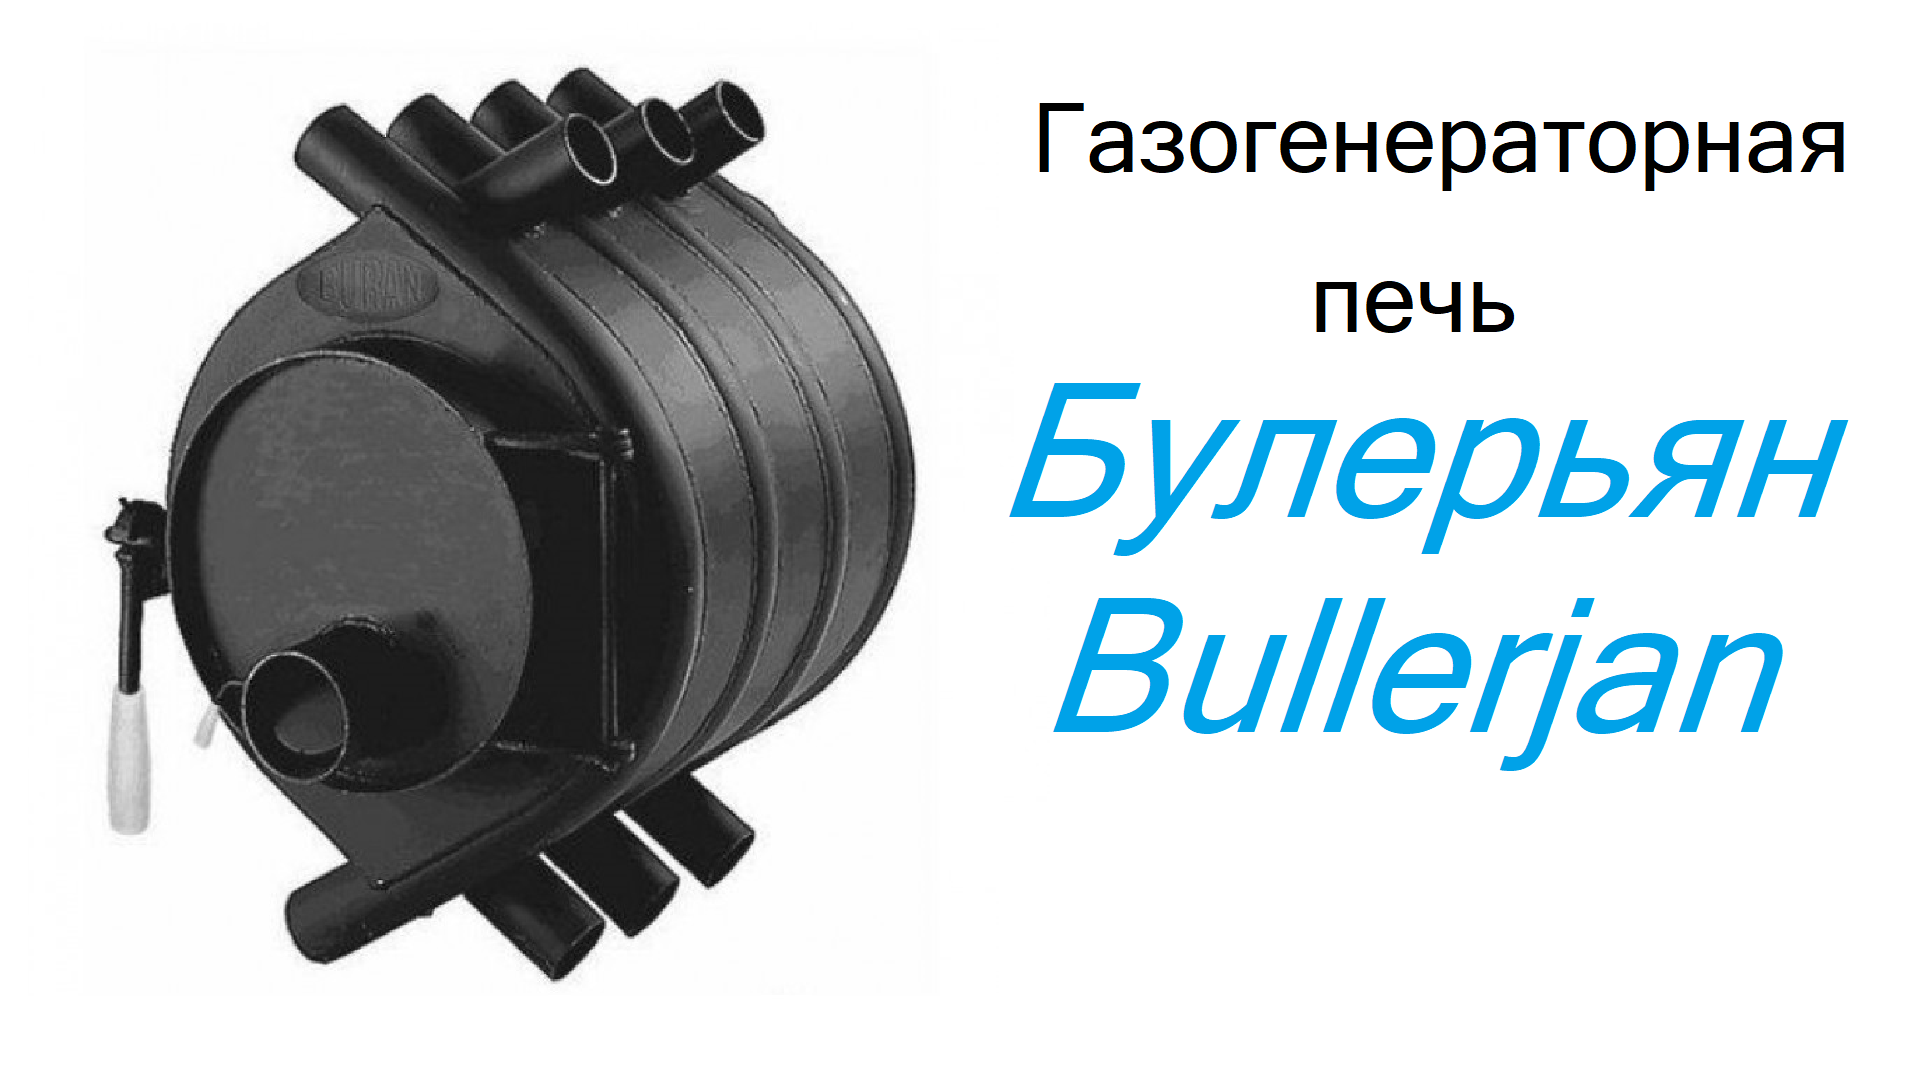 Газогенераторная печь Bullerjan Булерьян